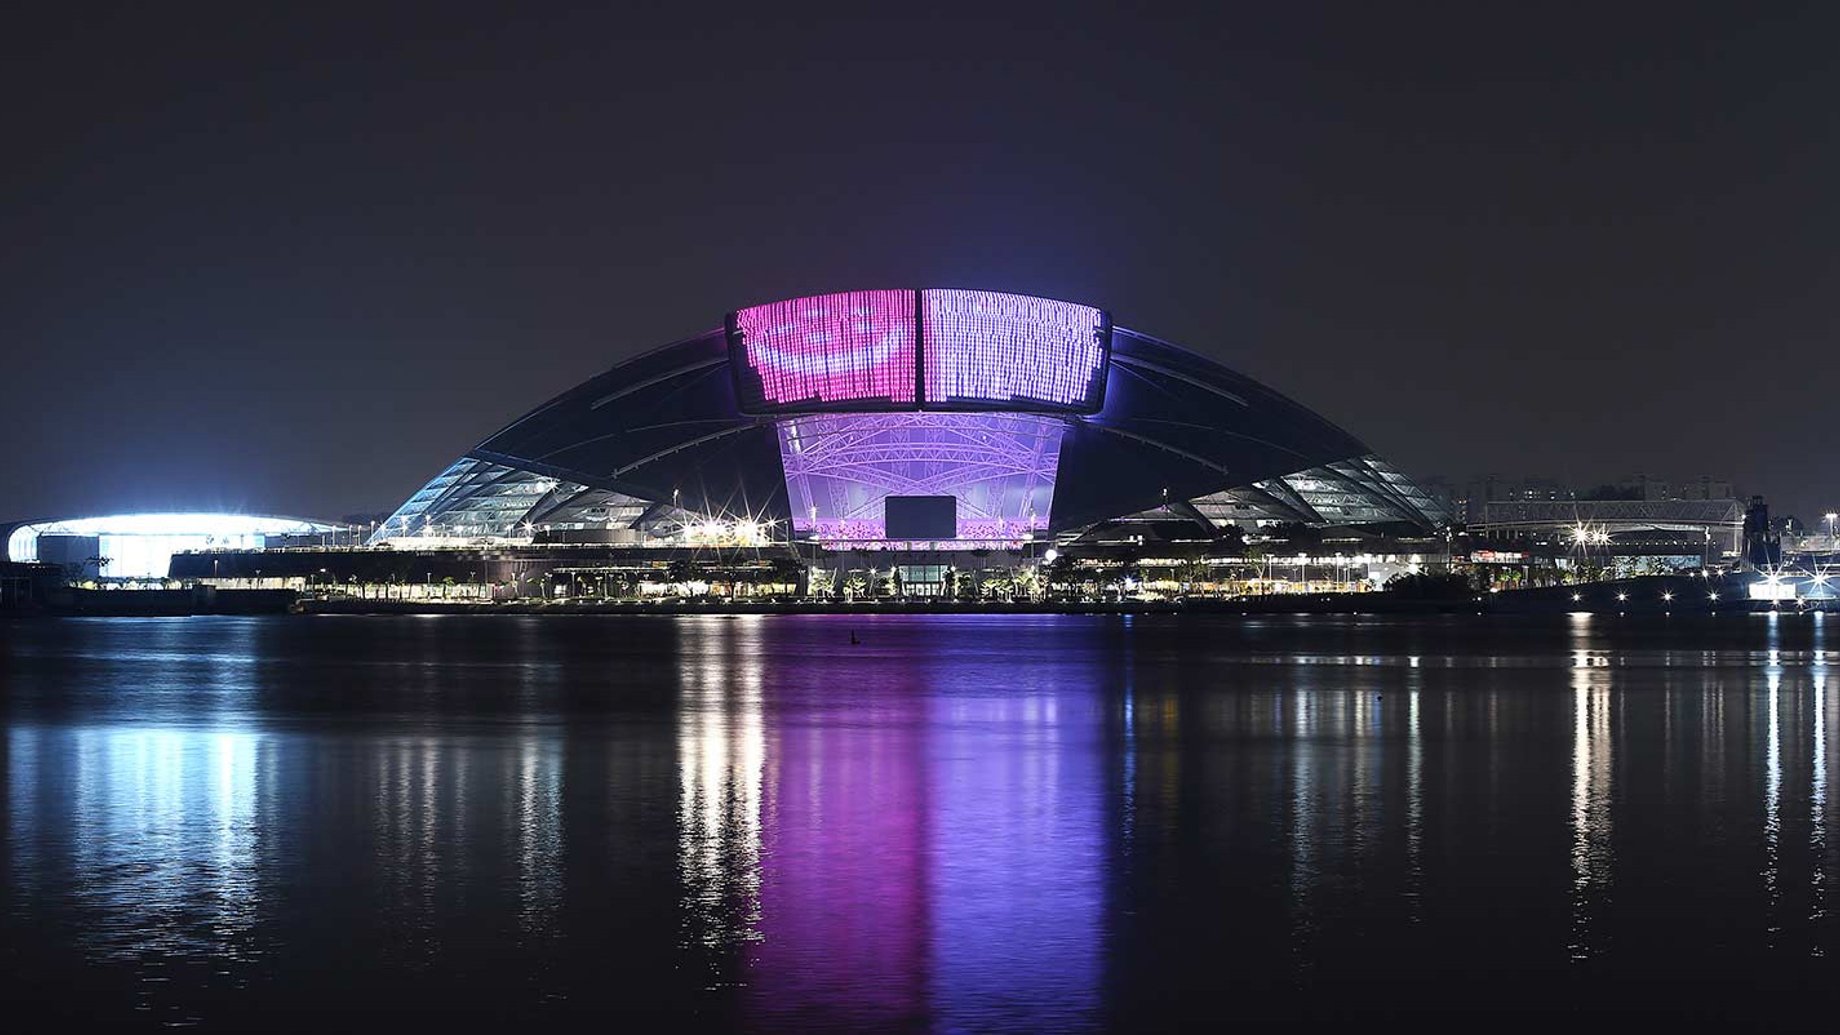 Singapore Sports Hub lit up at night